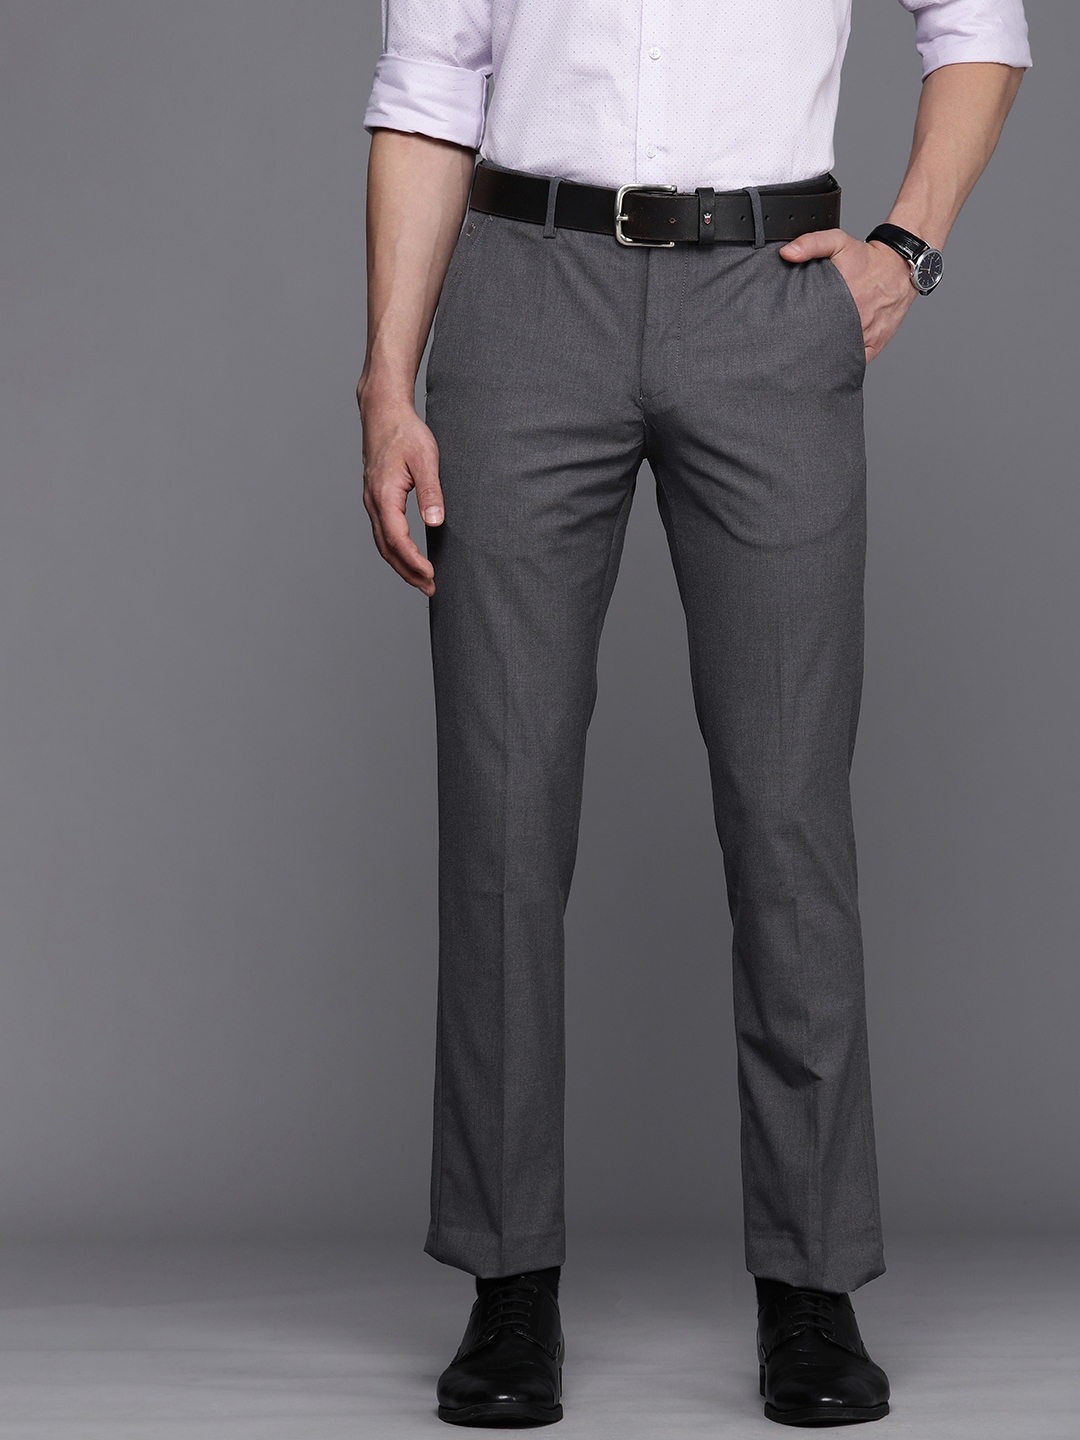 Buy Louis Philippe Jeans Khaki Steven Slim Fit Trousers - Trousers for Men  1441908